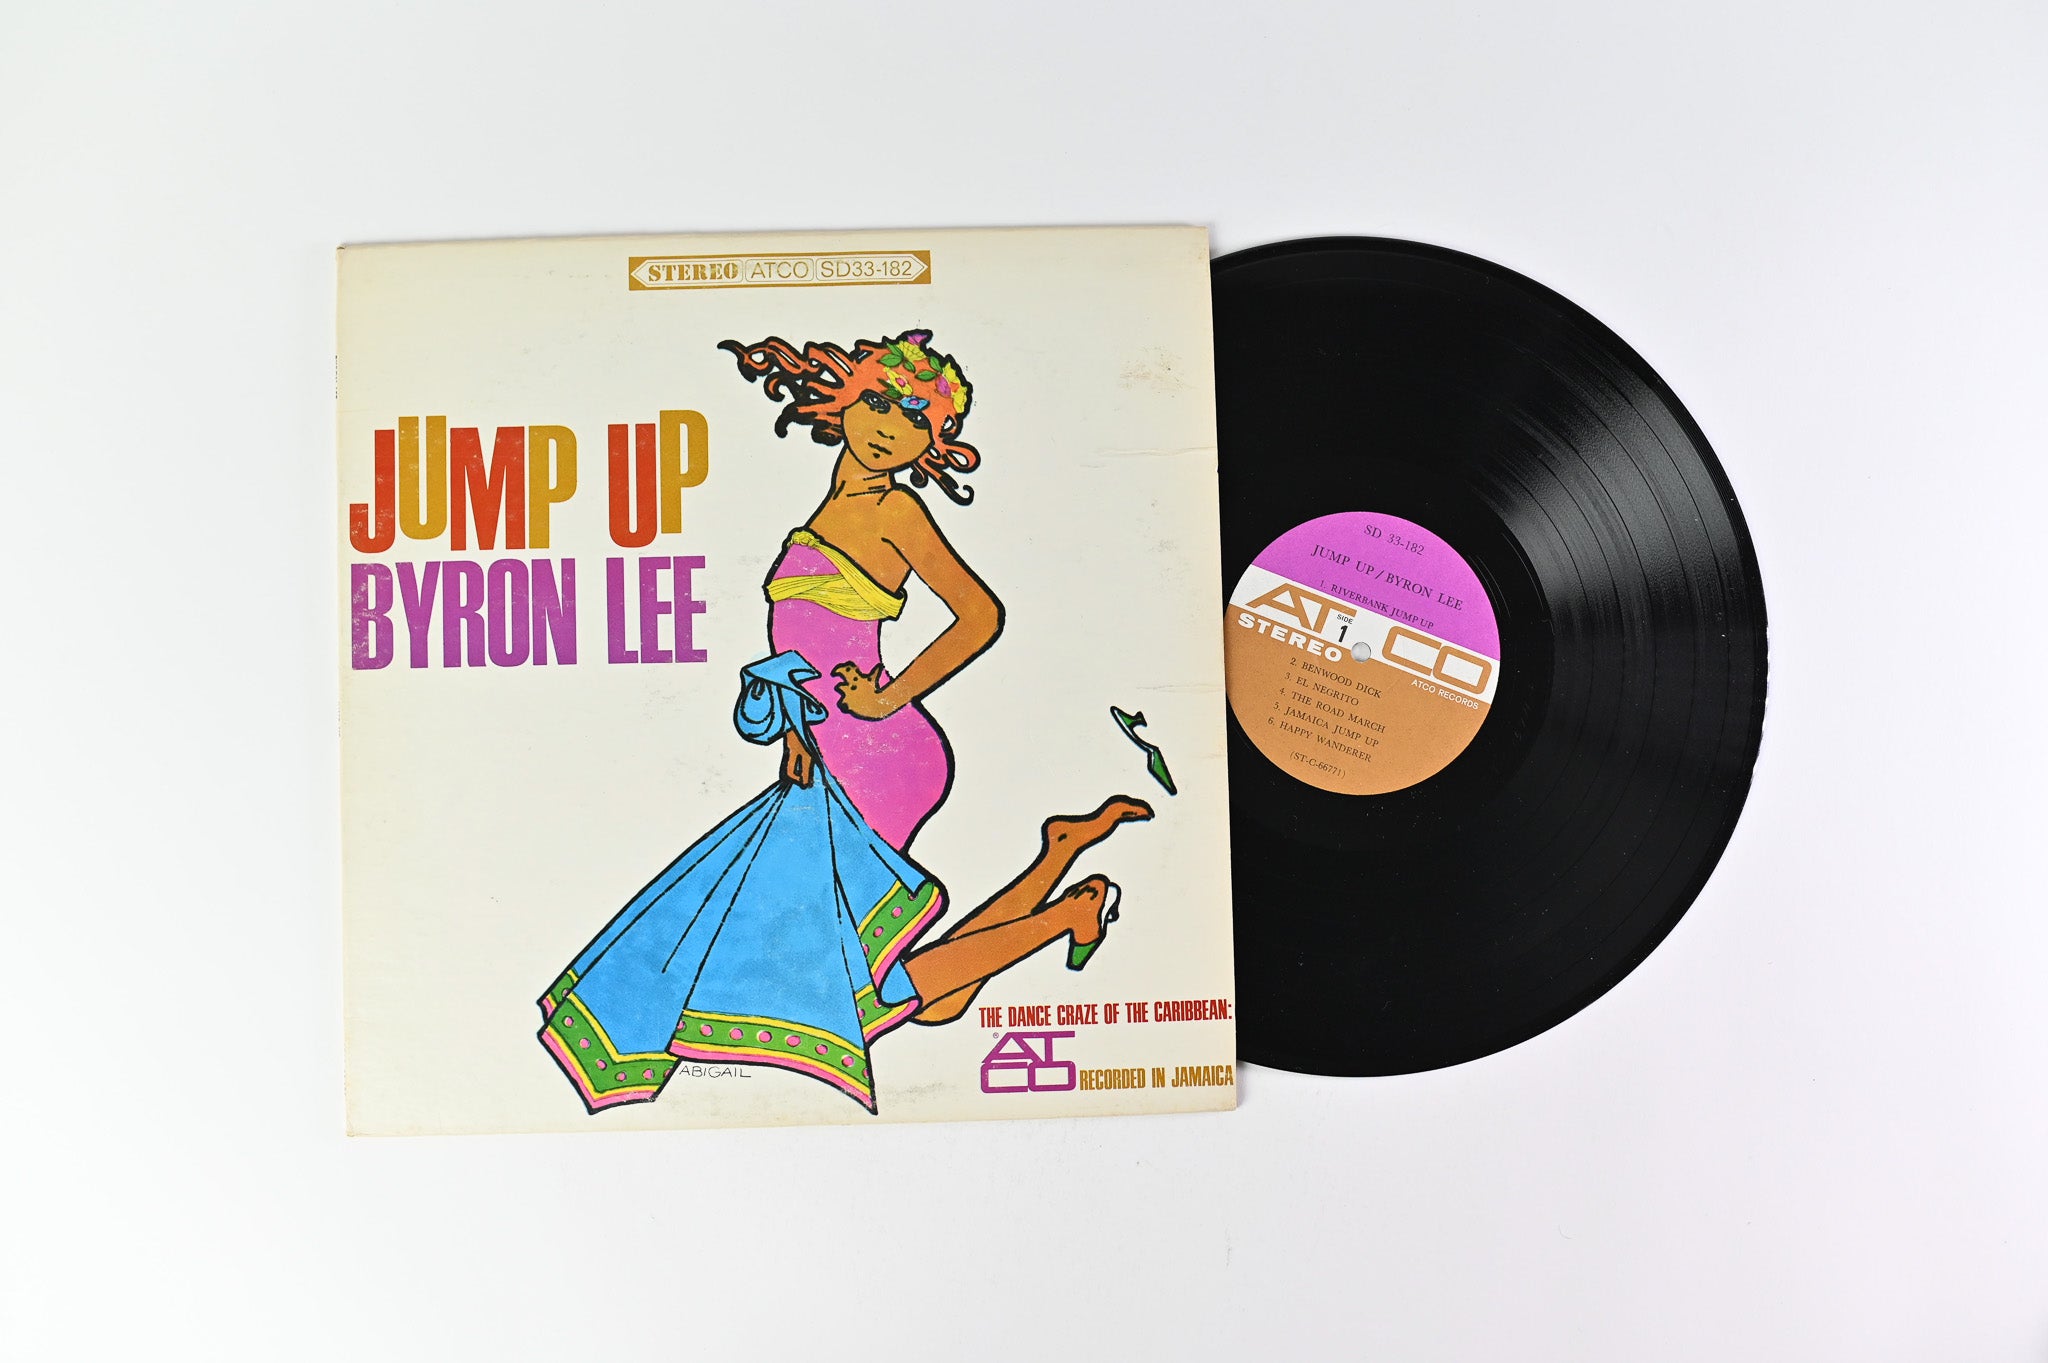 Byron Lee - Jump Up on Atco